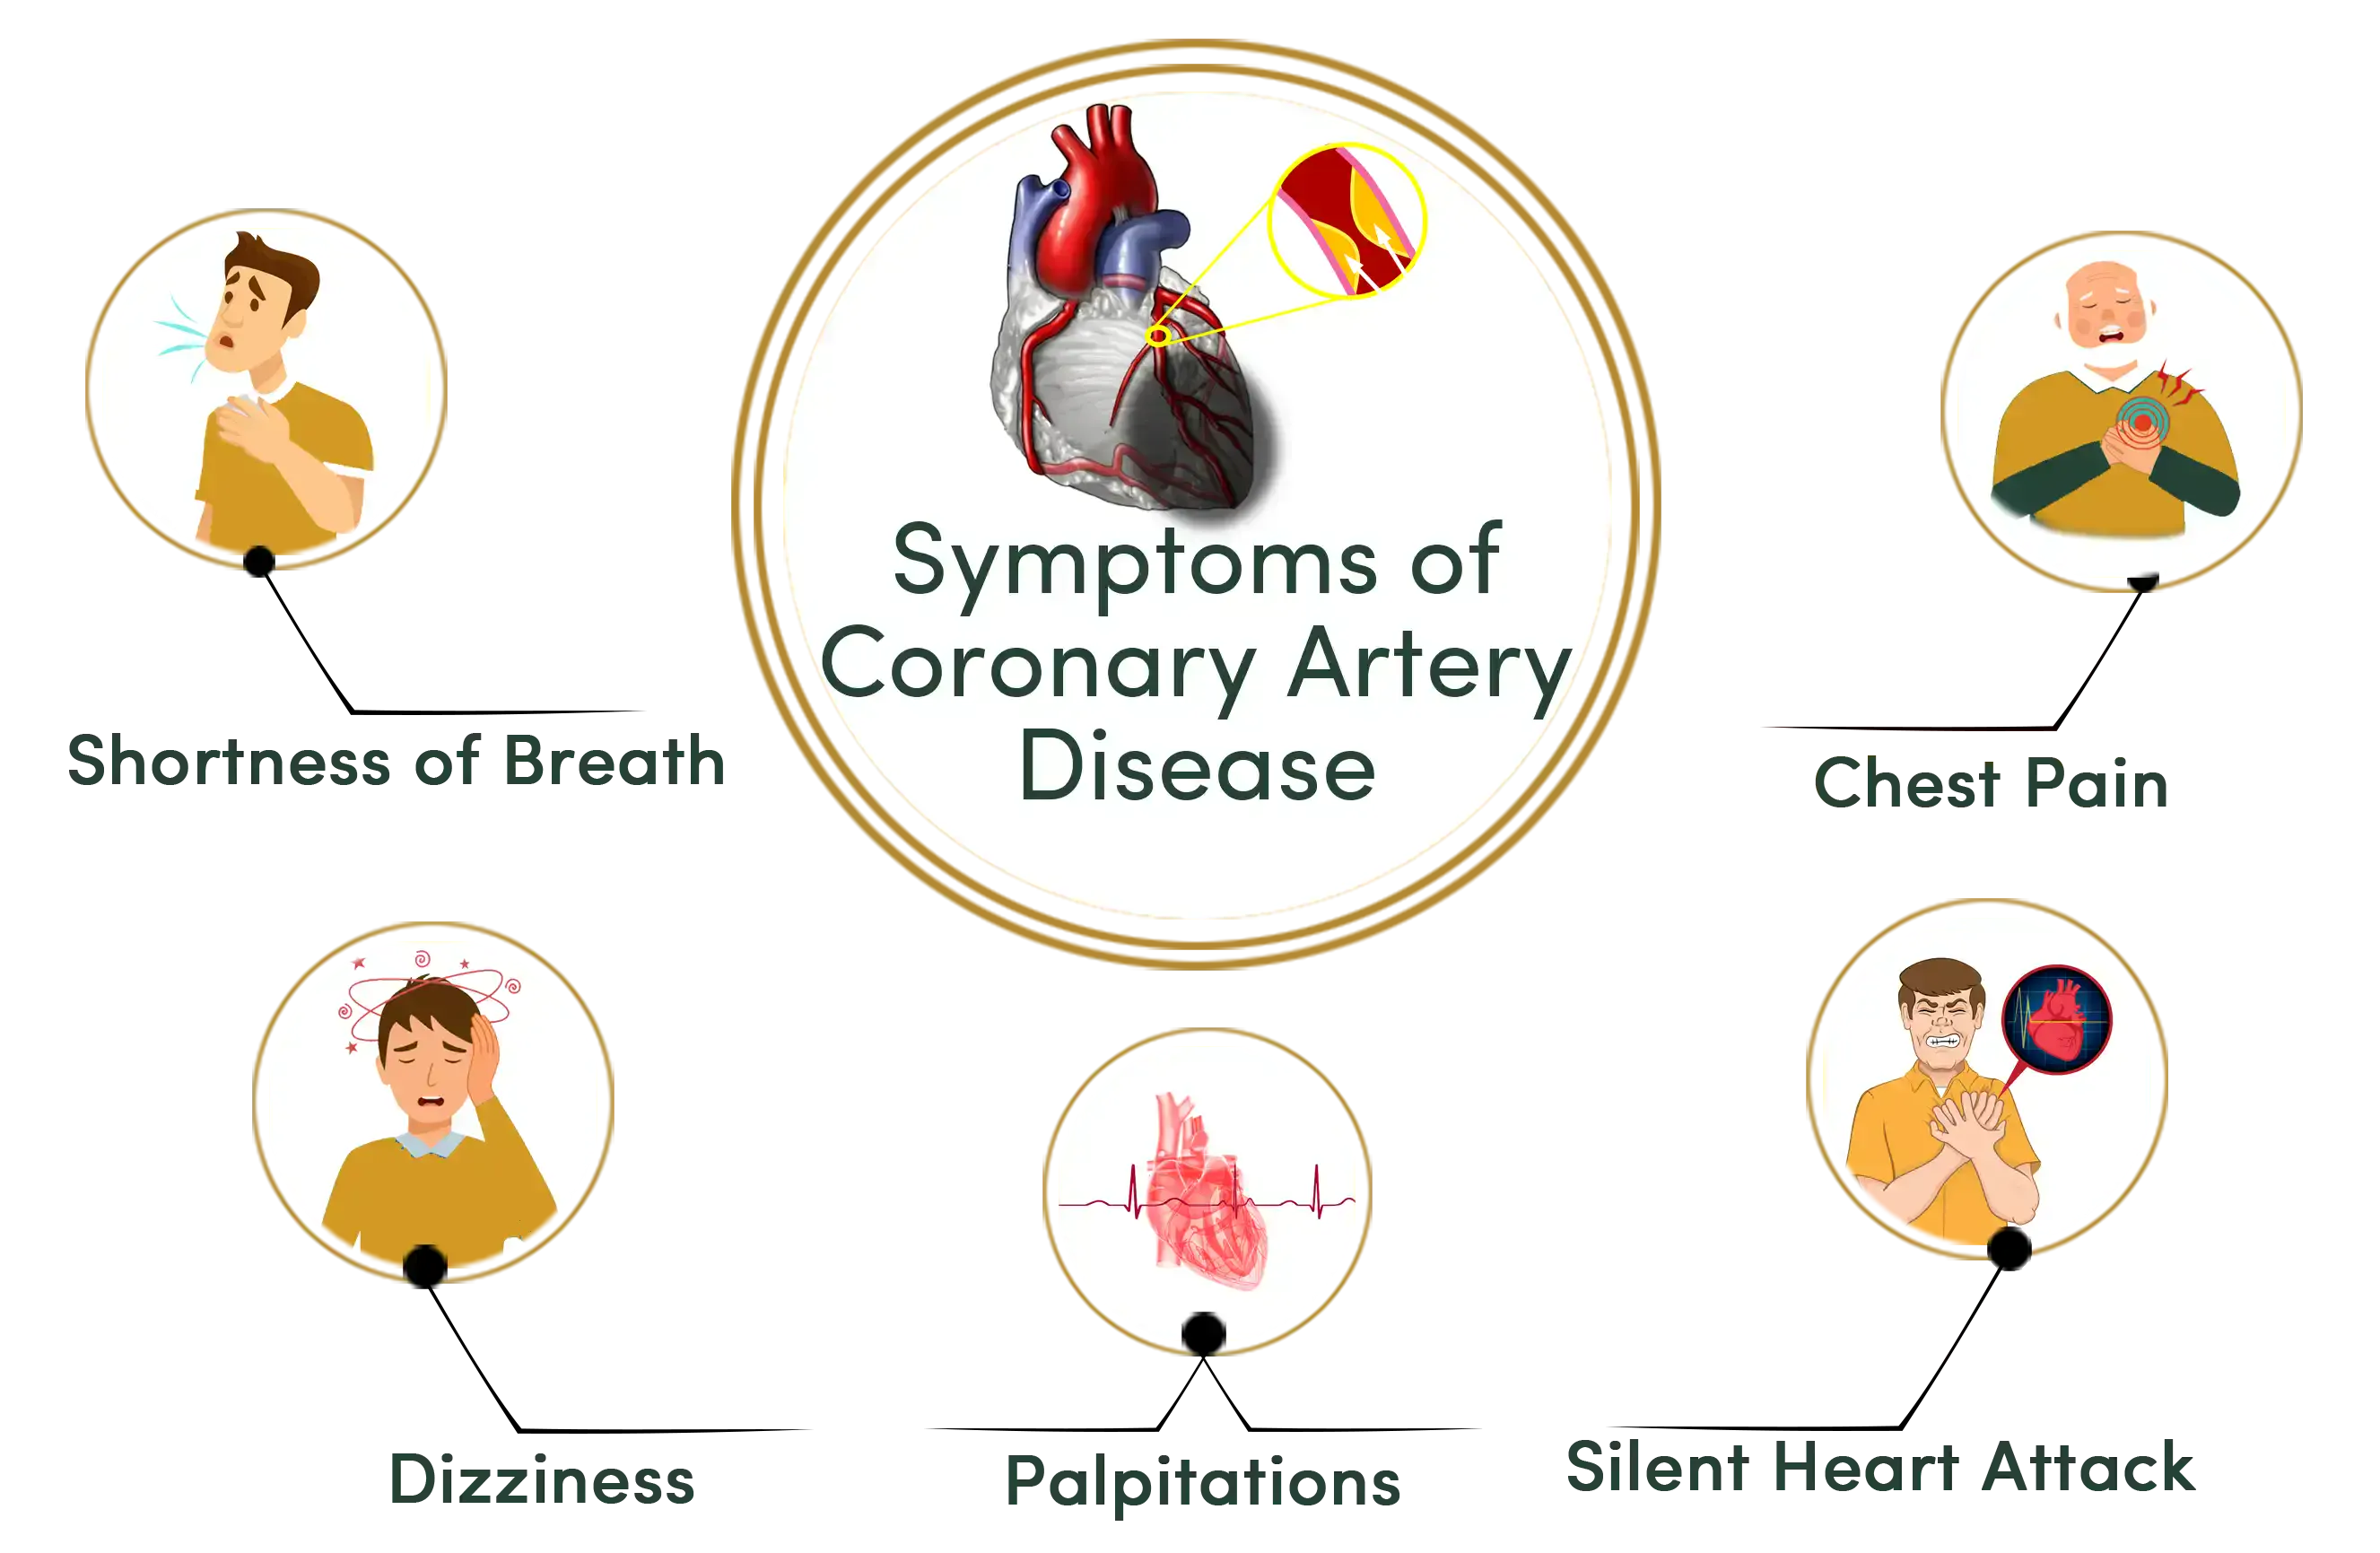 Symptoms of Coronary Artery Disease